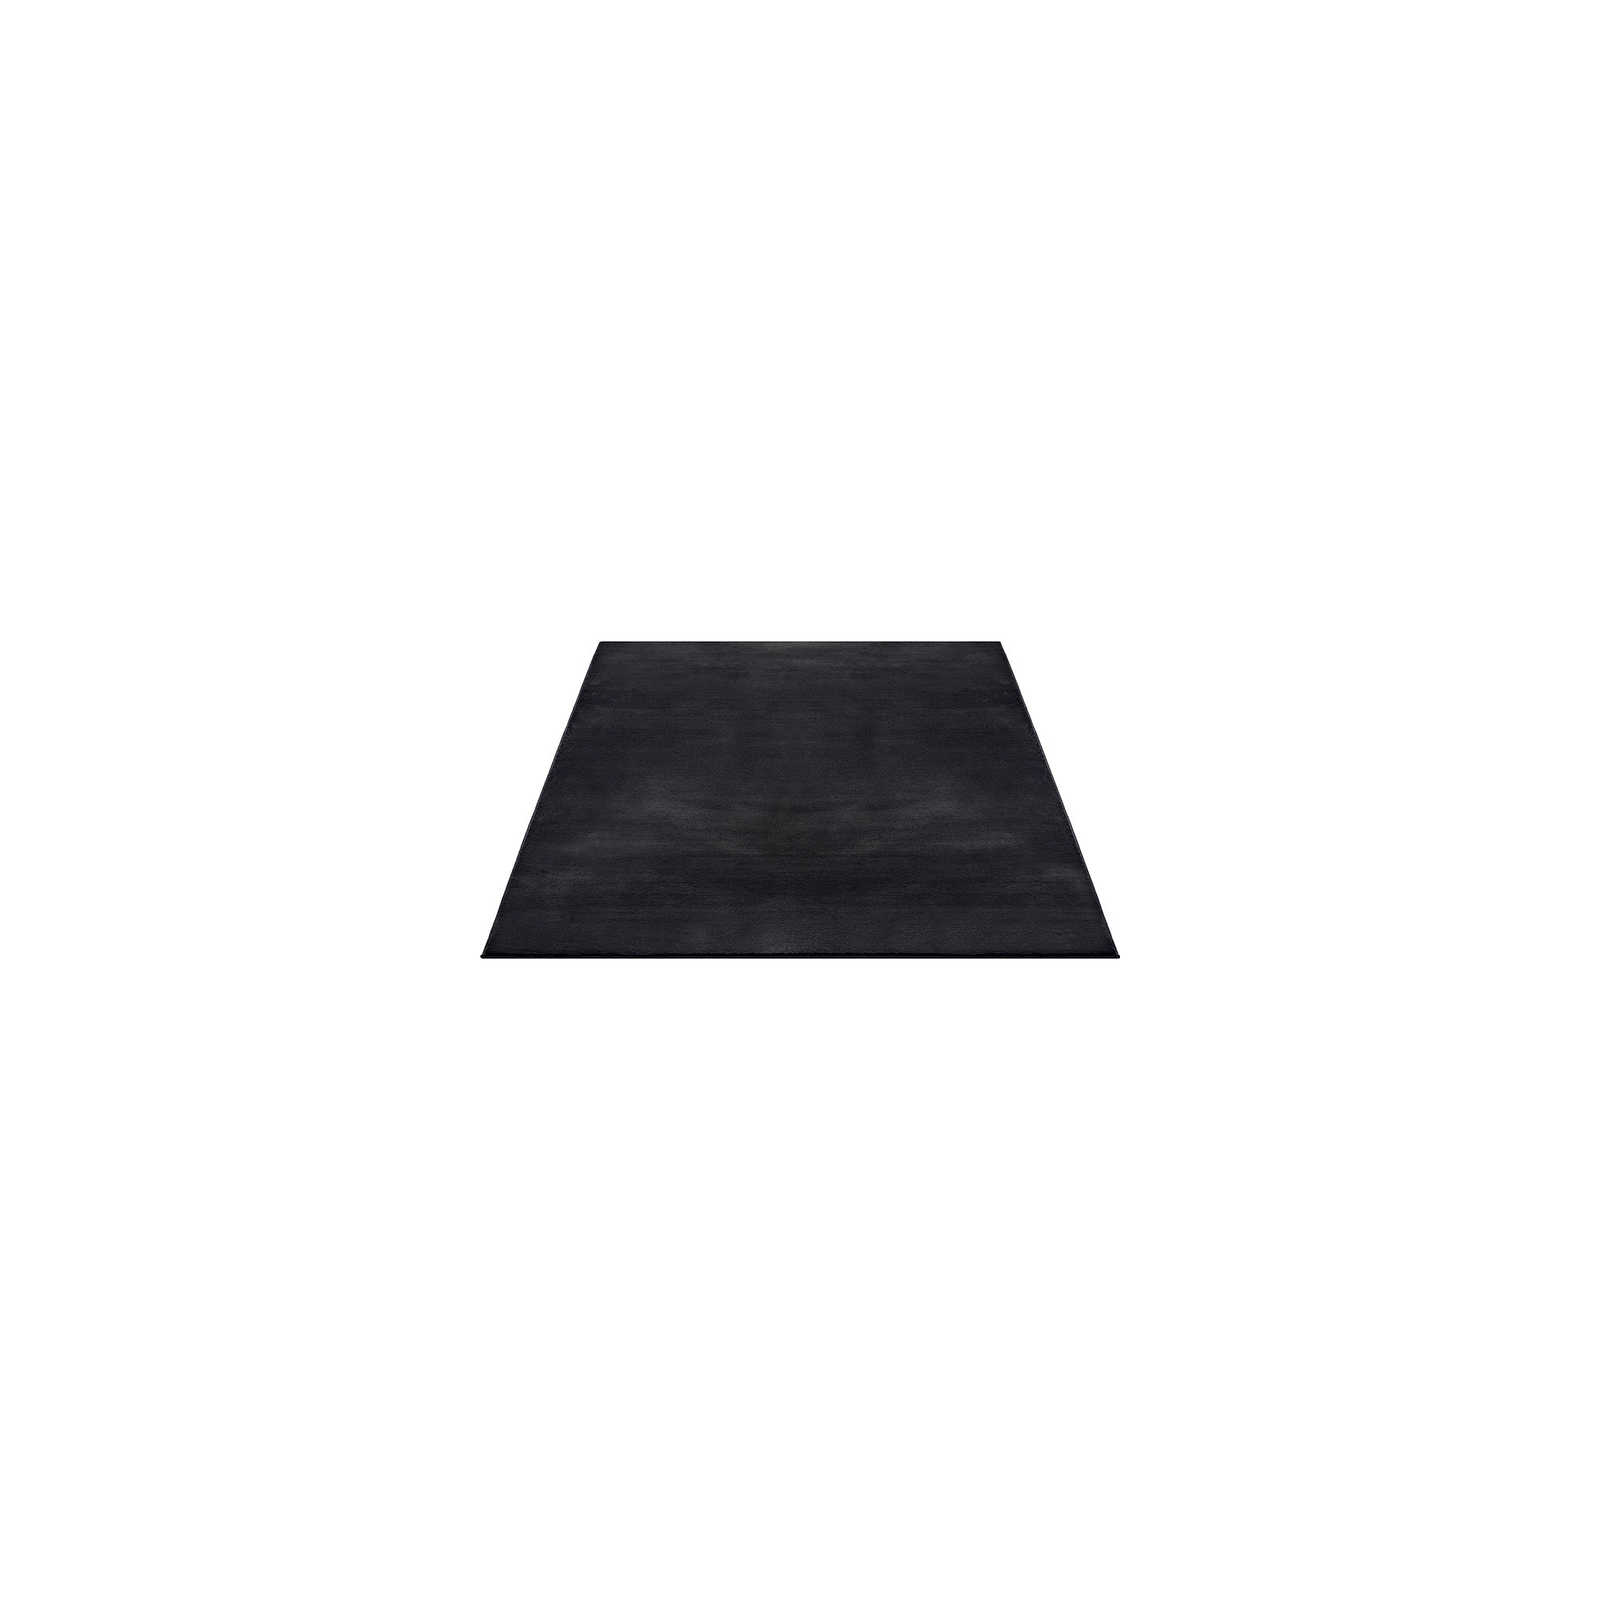 Cuddly soft high pile carpet in black - 140 x 70 cm
